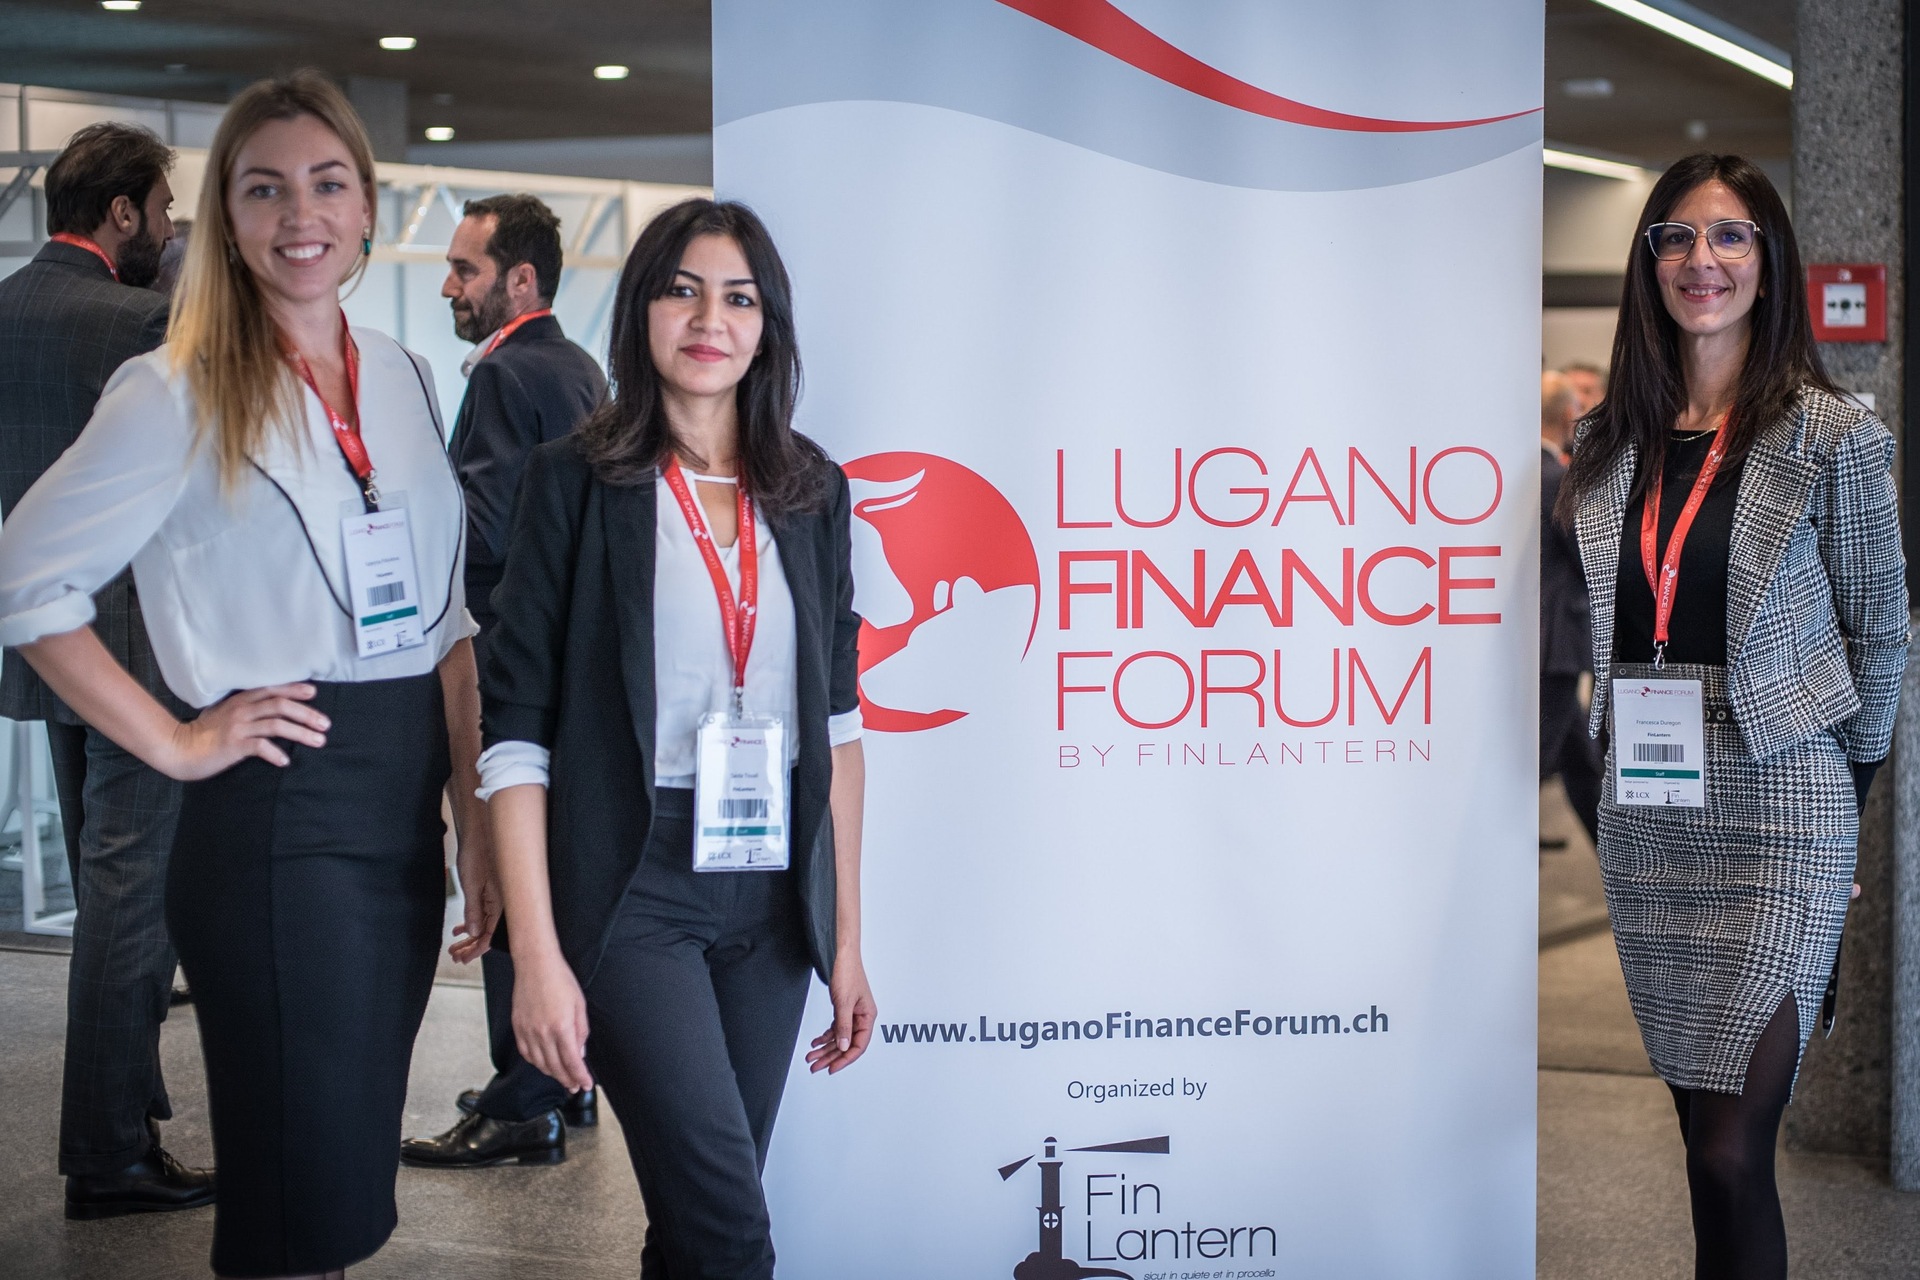 Lugano Finance Forum: Area Pameran "Lugano Finance Forum" edisi 2022